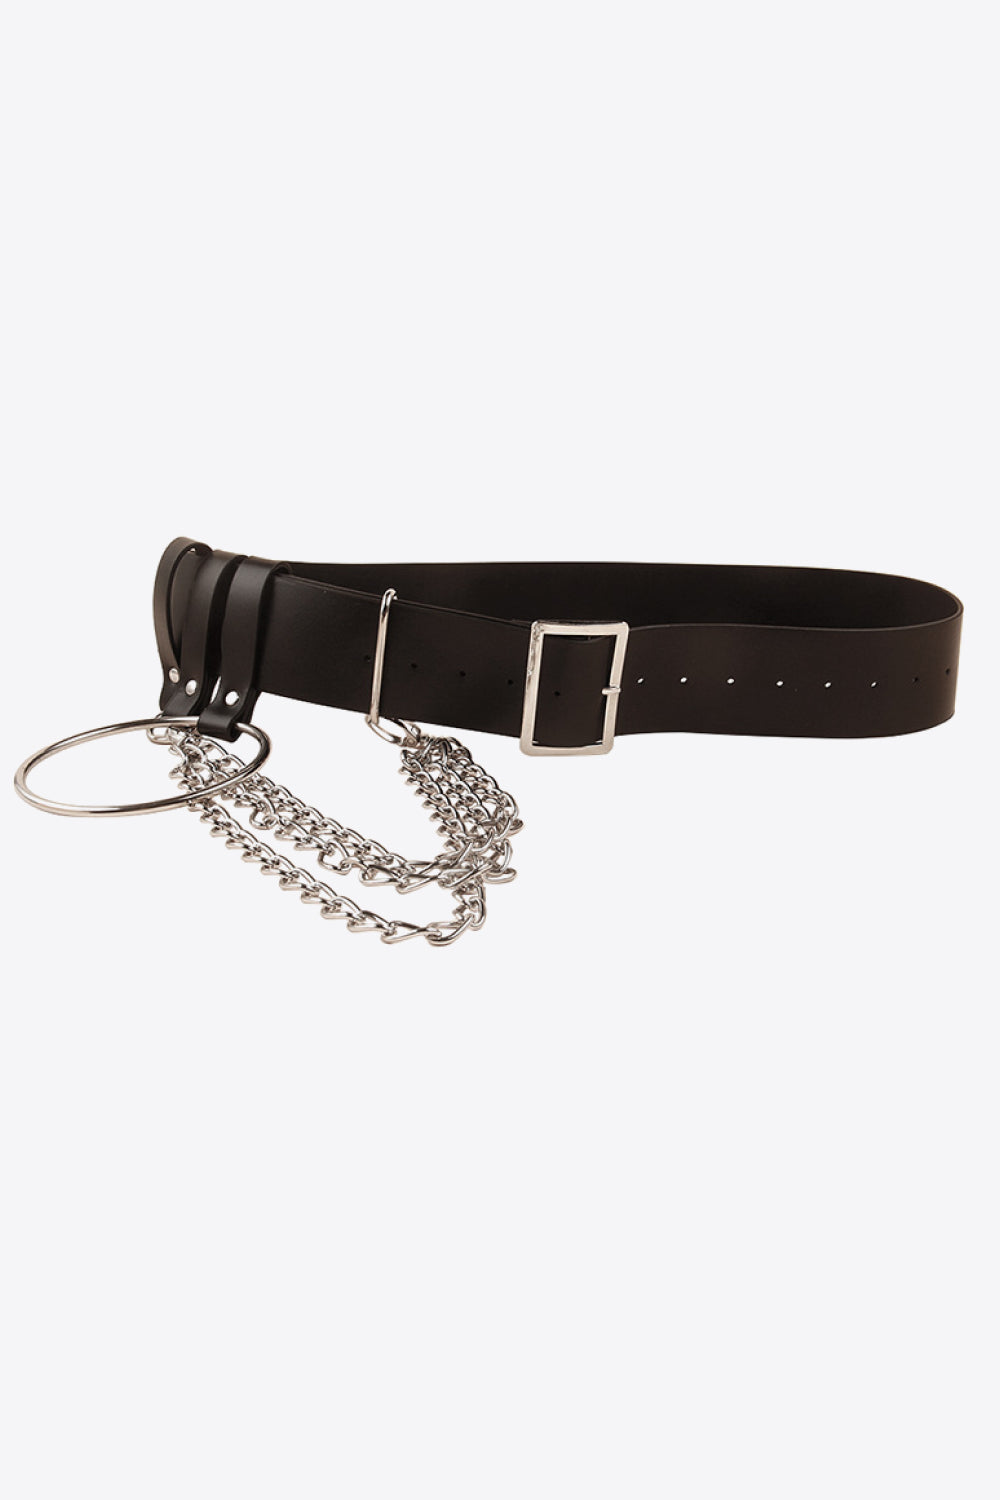 Jessica Anne Beauty PU Belt with Chain